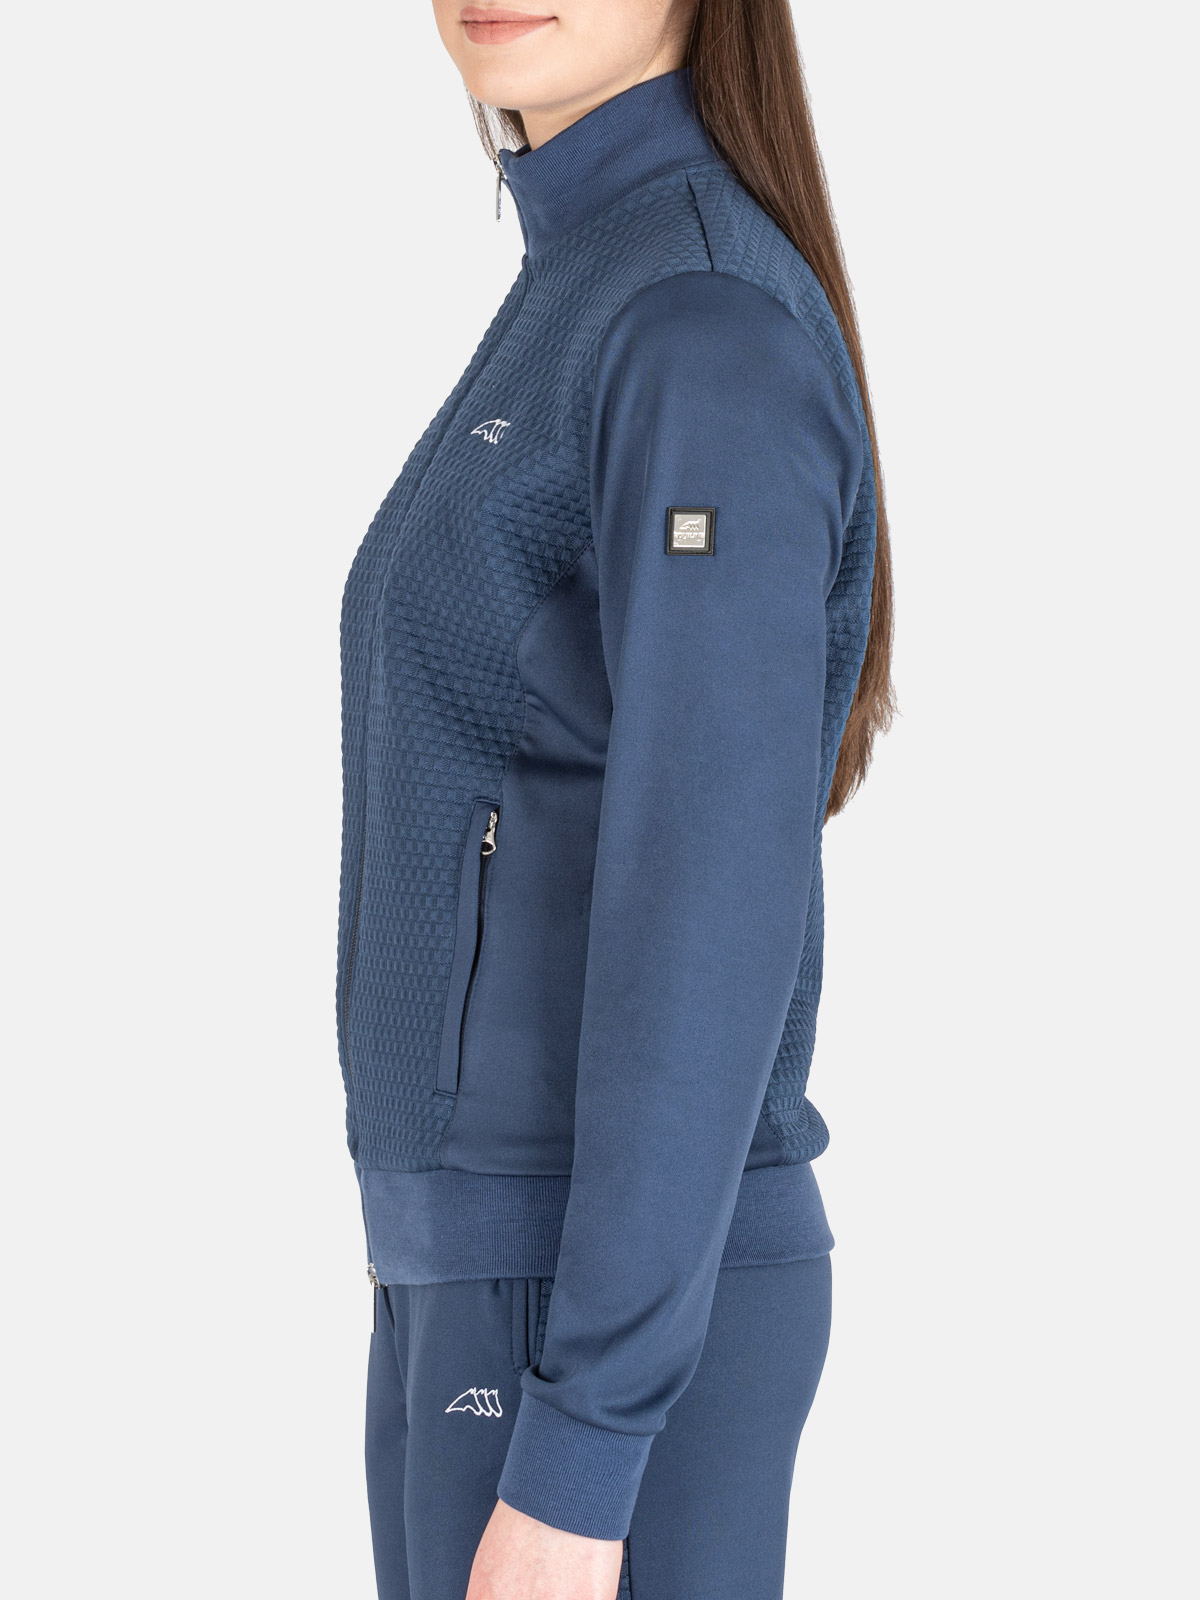 EQUILINE Damen Sweat Jacke Trainingsjacke Elaste - diplomatic blue - XS - 4